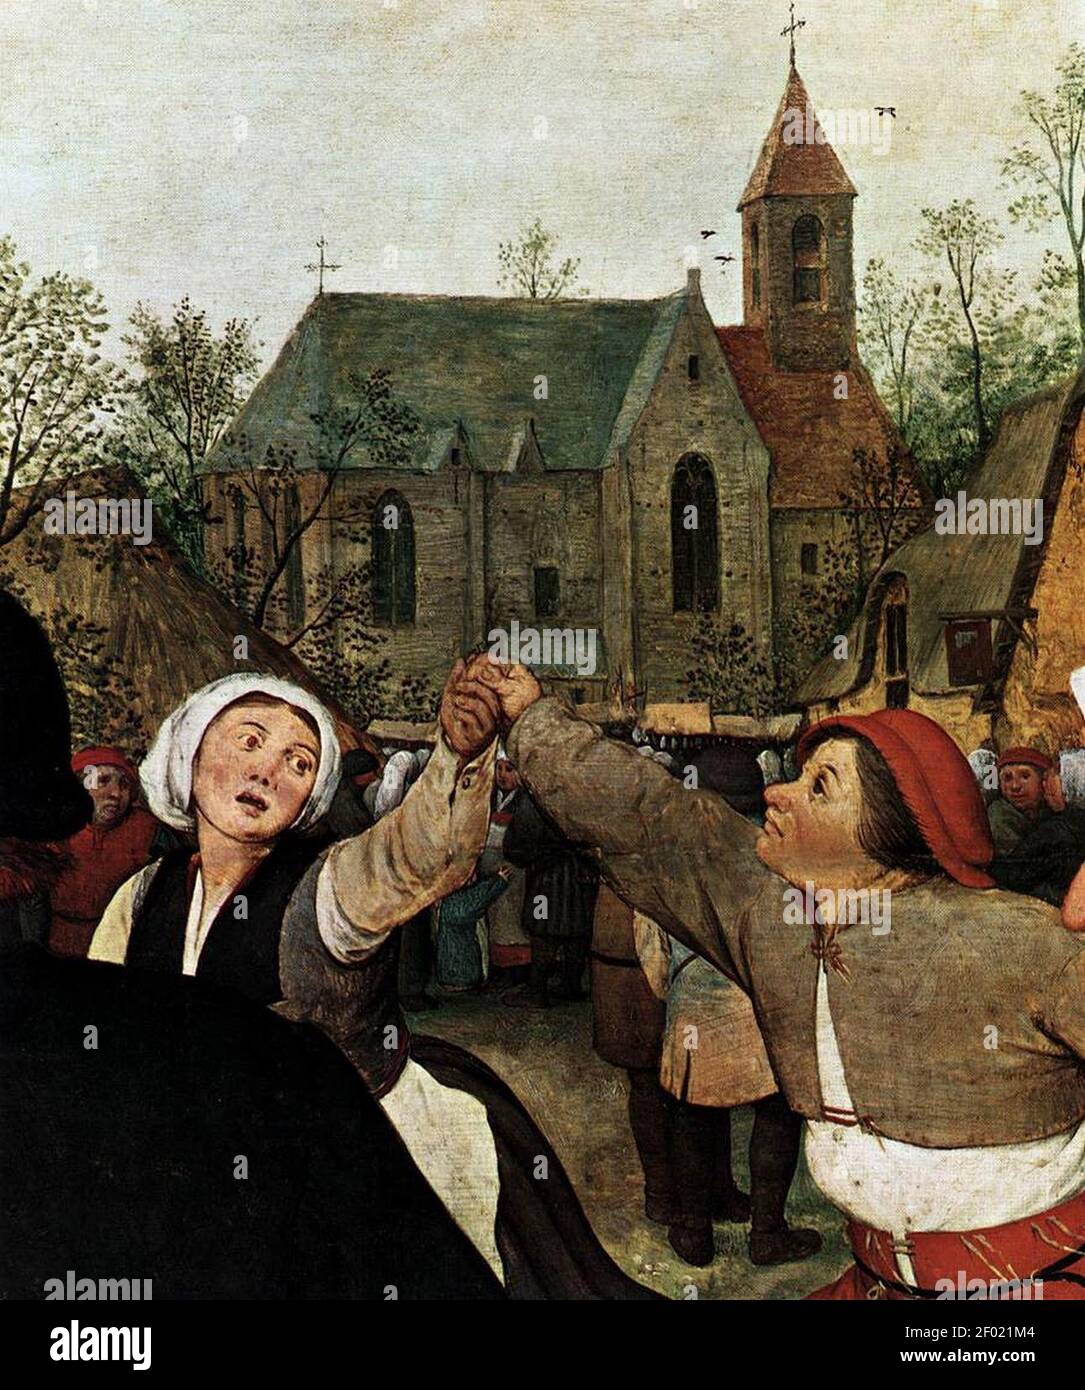 Pieter Bruegel the Elder - The Peasant Dance (detail) Stock Photo